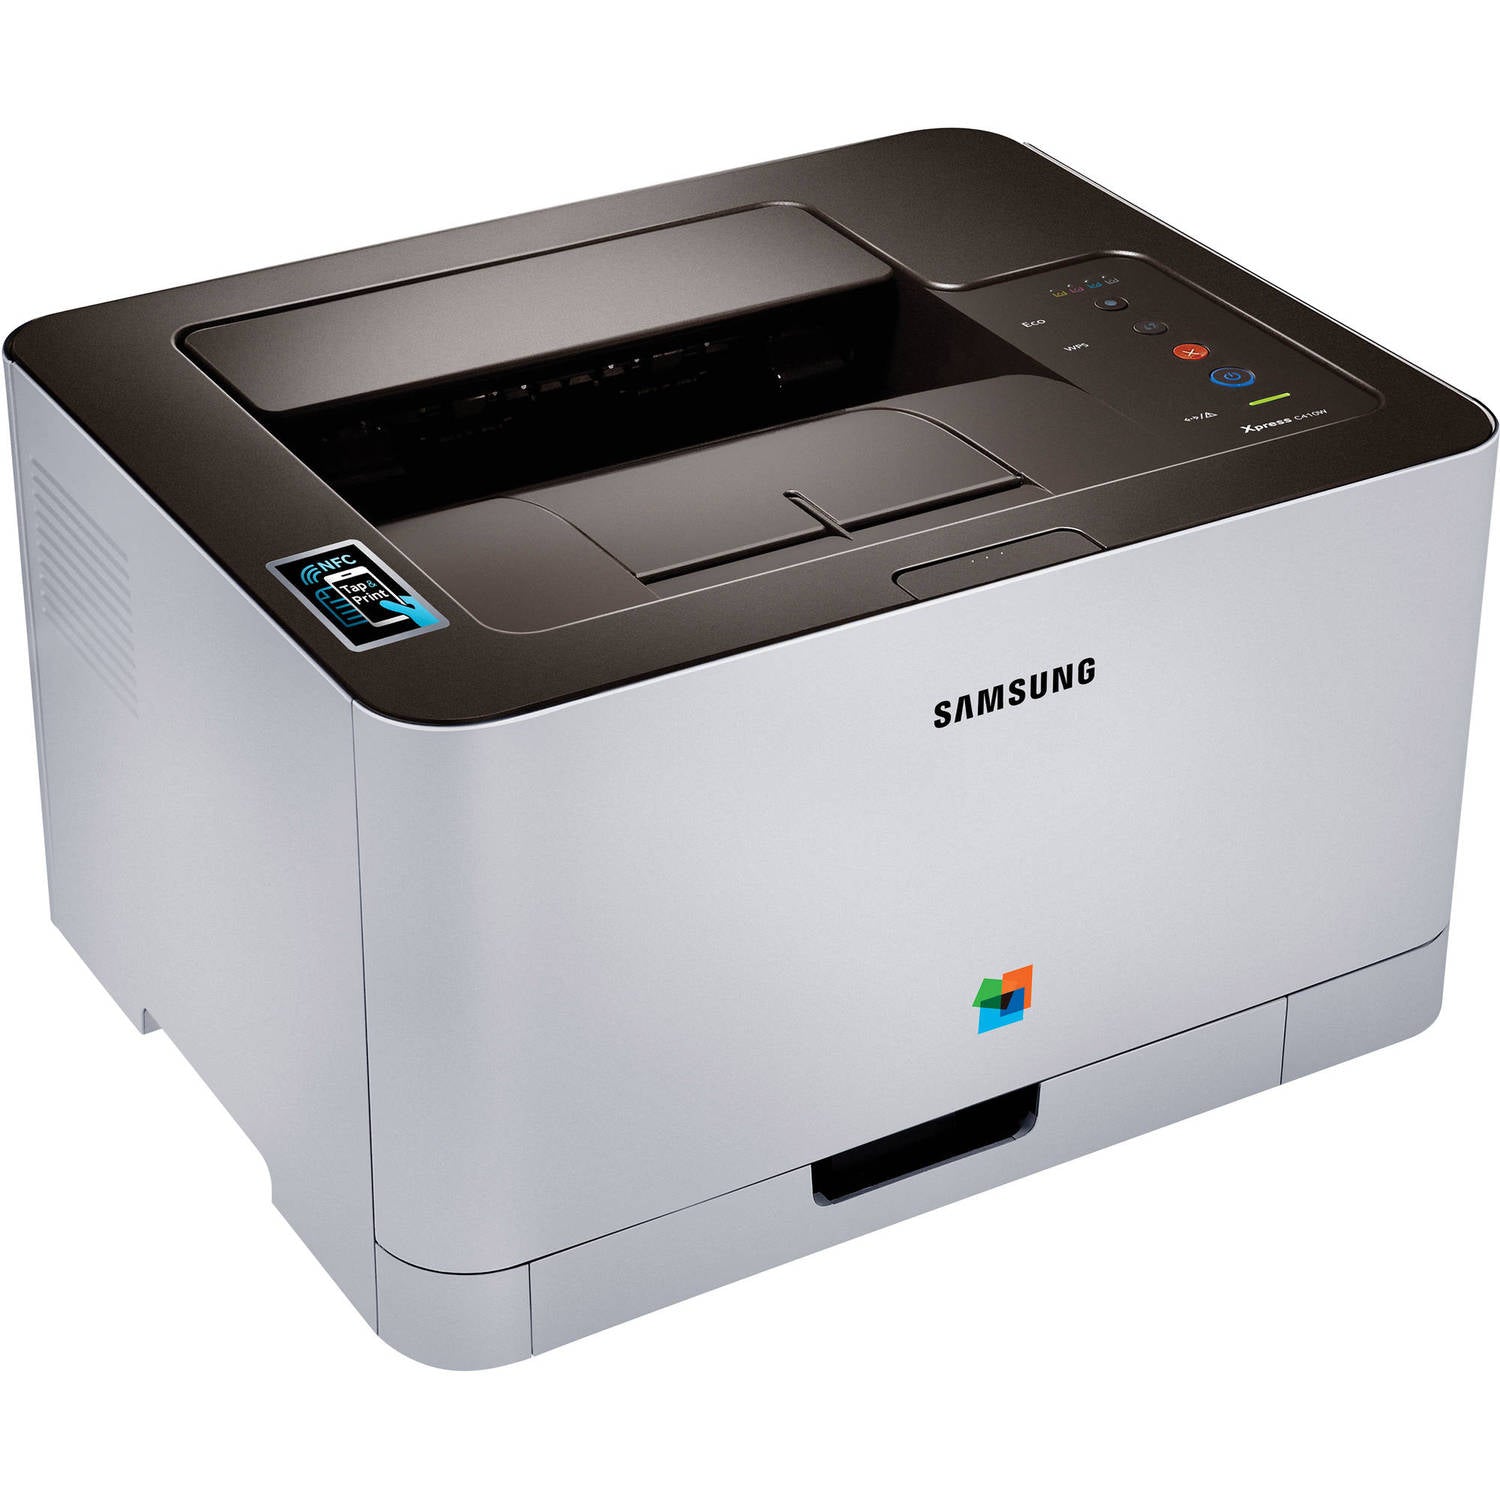 Samsung SLC410W/XAA Color Wireless Laser Printer - Samsung Parts USA